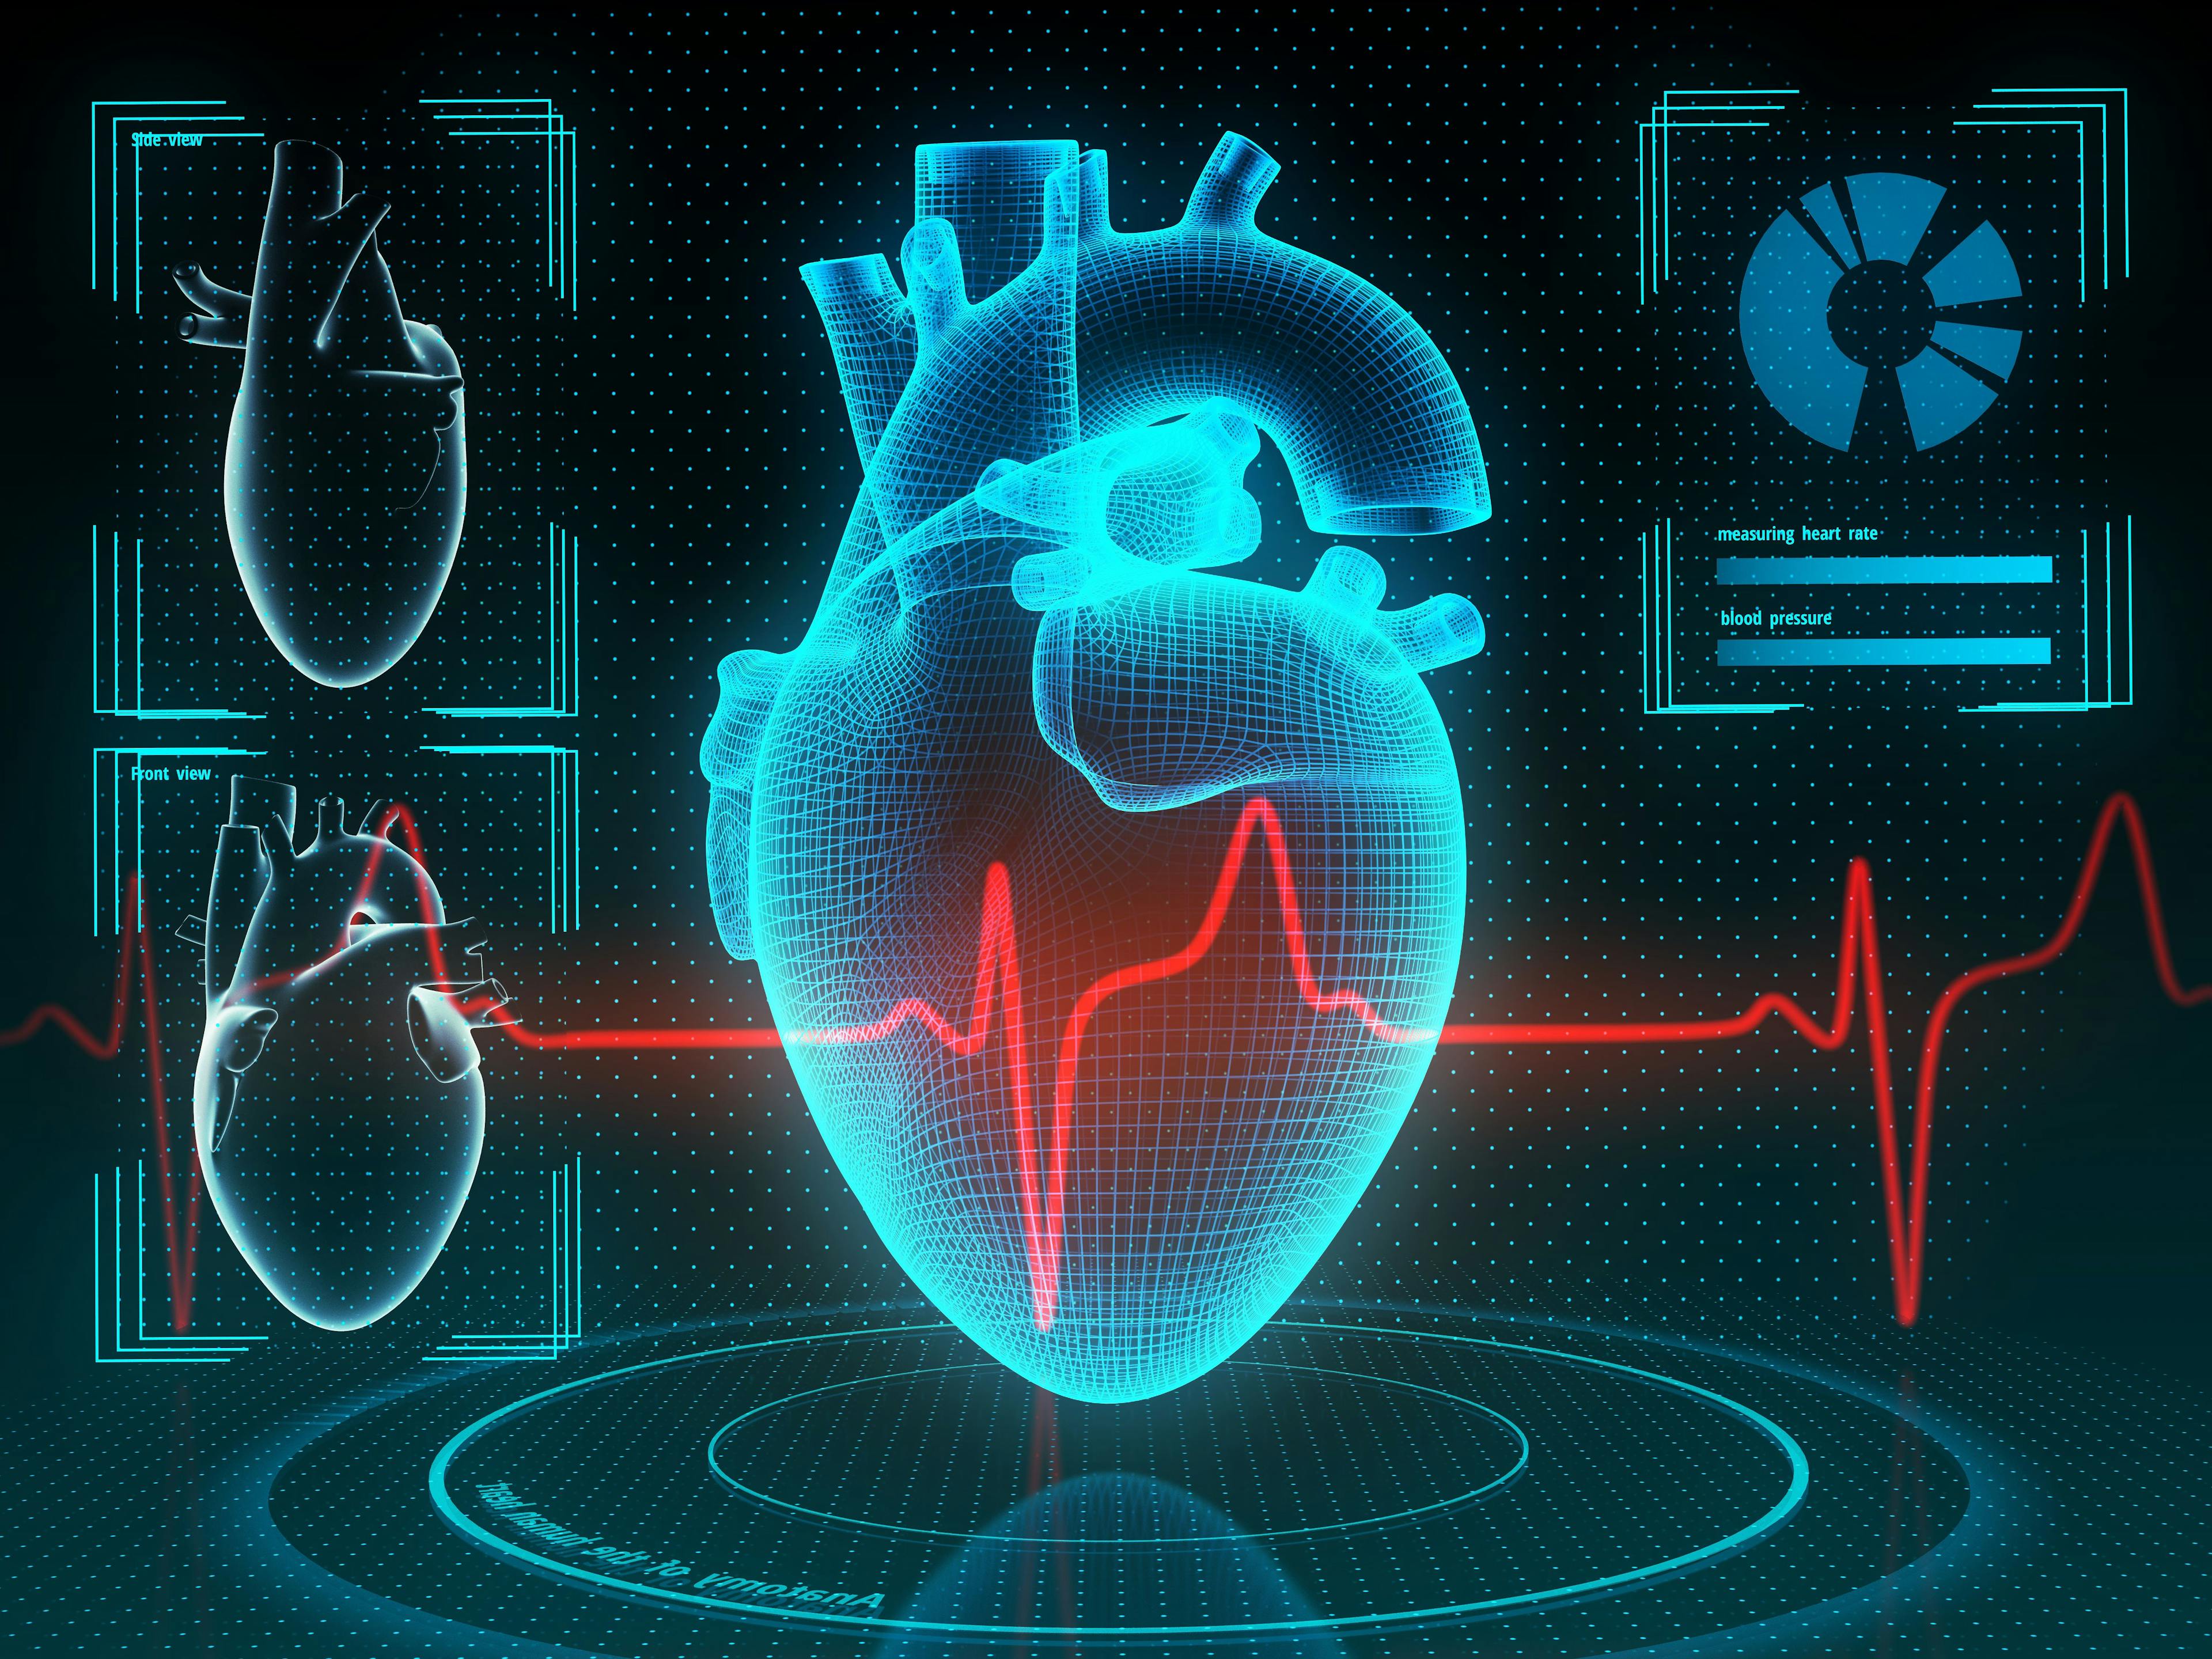 Heart graphic | Image credit: iaremenko – stock.adobe.com